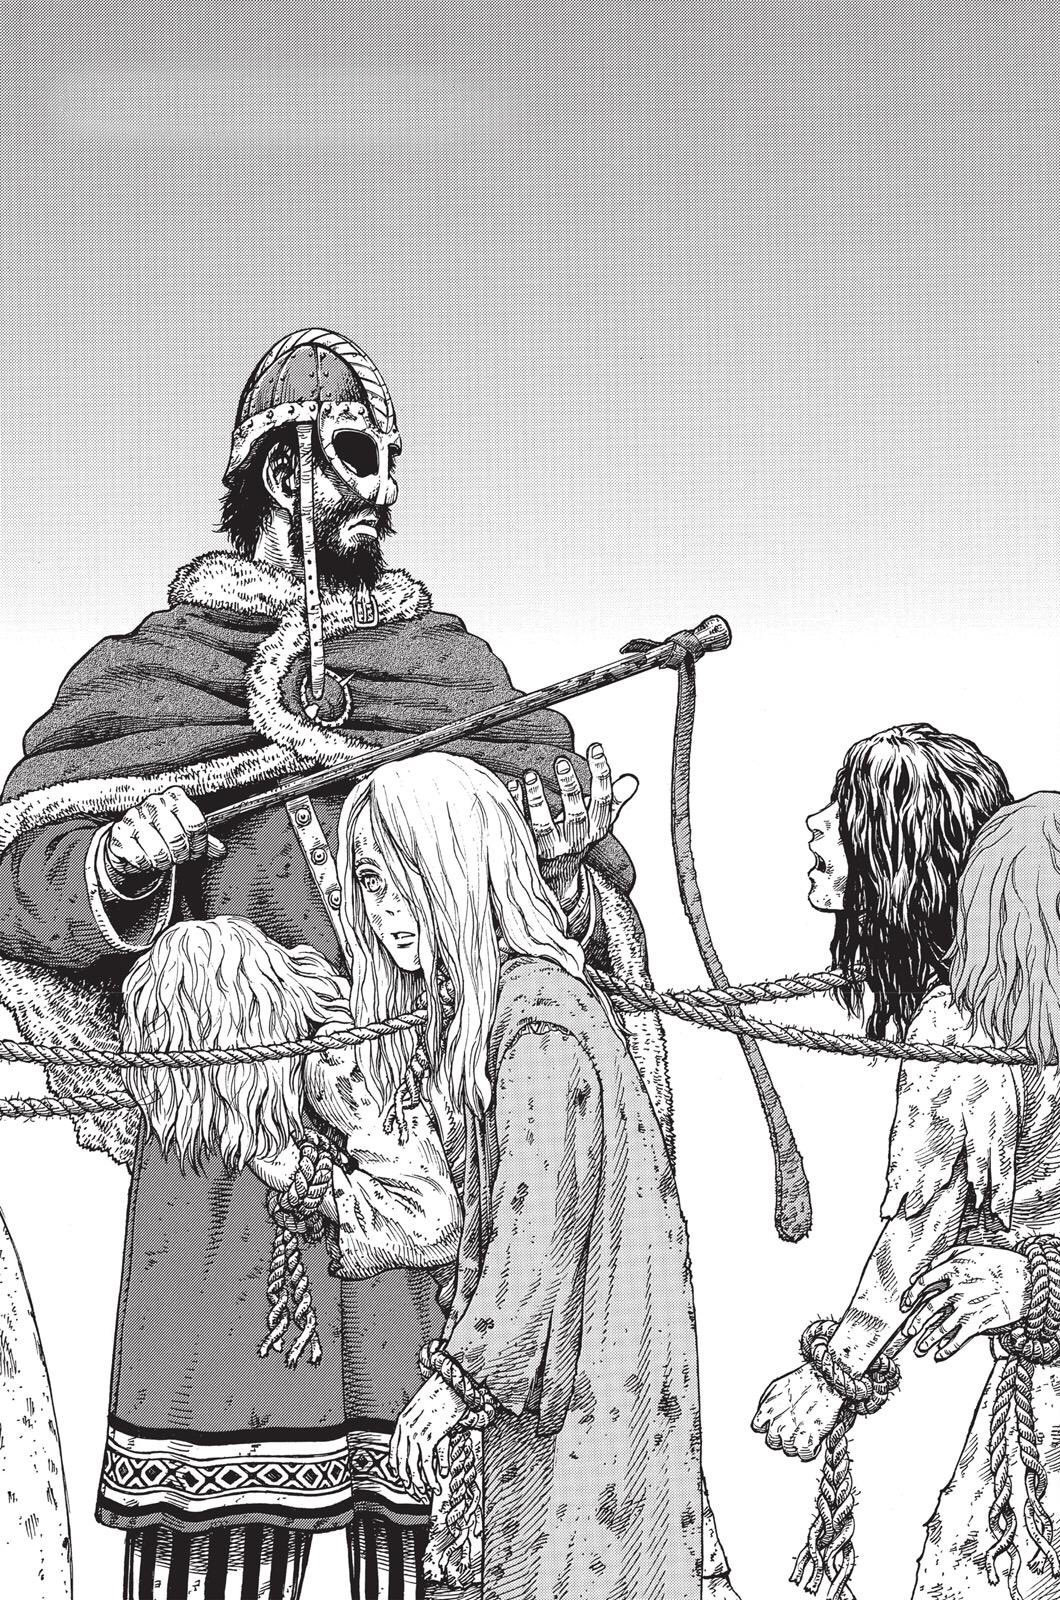 Platon on X: “Vinland Saga” Manga Panels (Textless Edition Thread